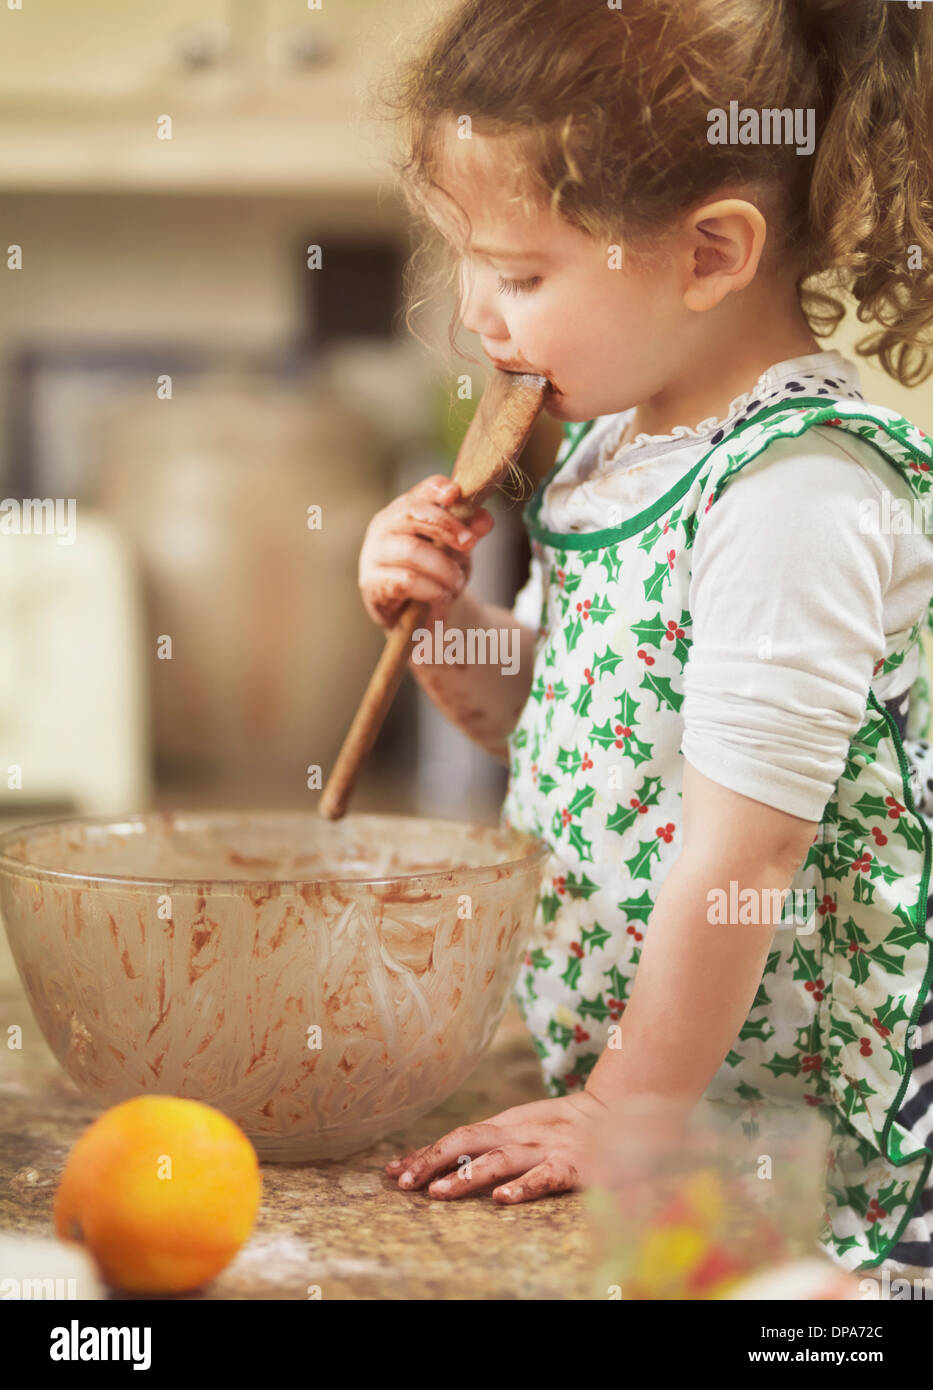 https://c8.alamy.com/comp/DPA72C/child-tasting-cake-mix-with-wooden-spoon-DPA72C.jpg